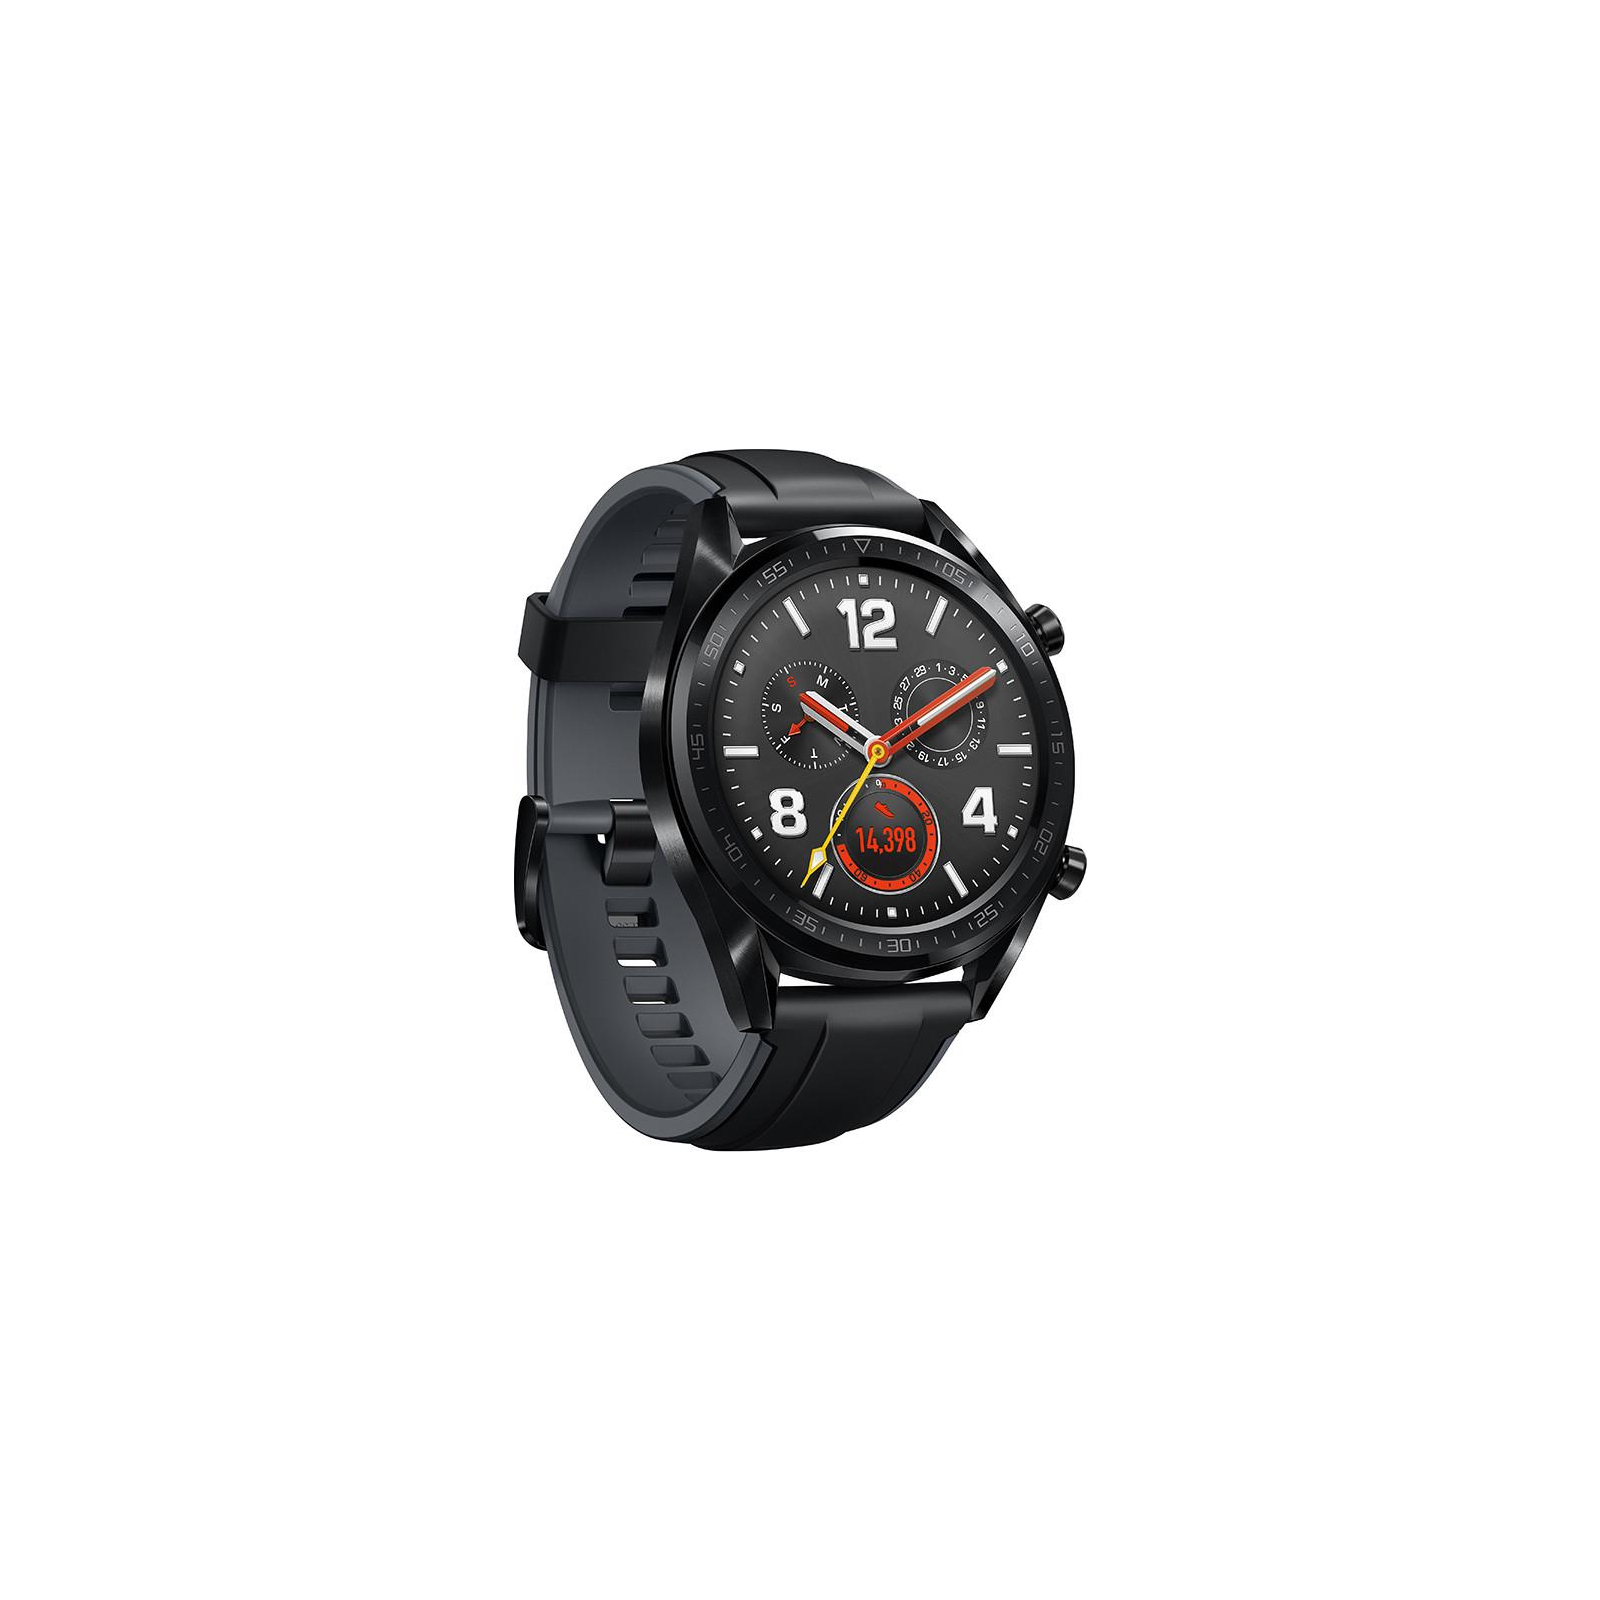 Смарт-часы Huawei GT Fortuna-B19 (Sport) Black (55023259) изображение 3